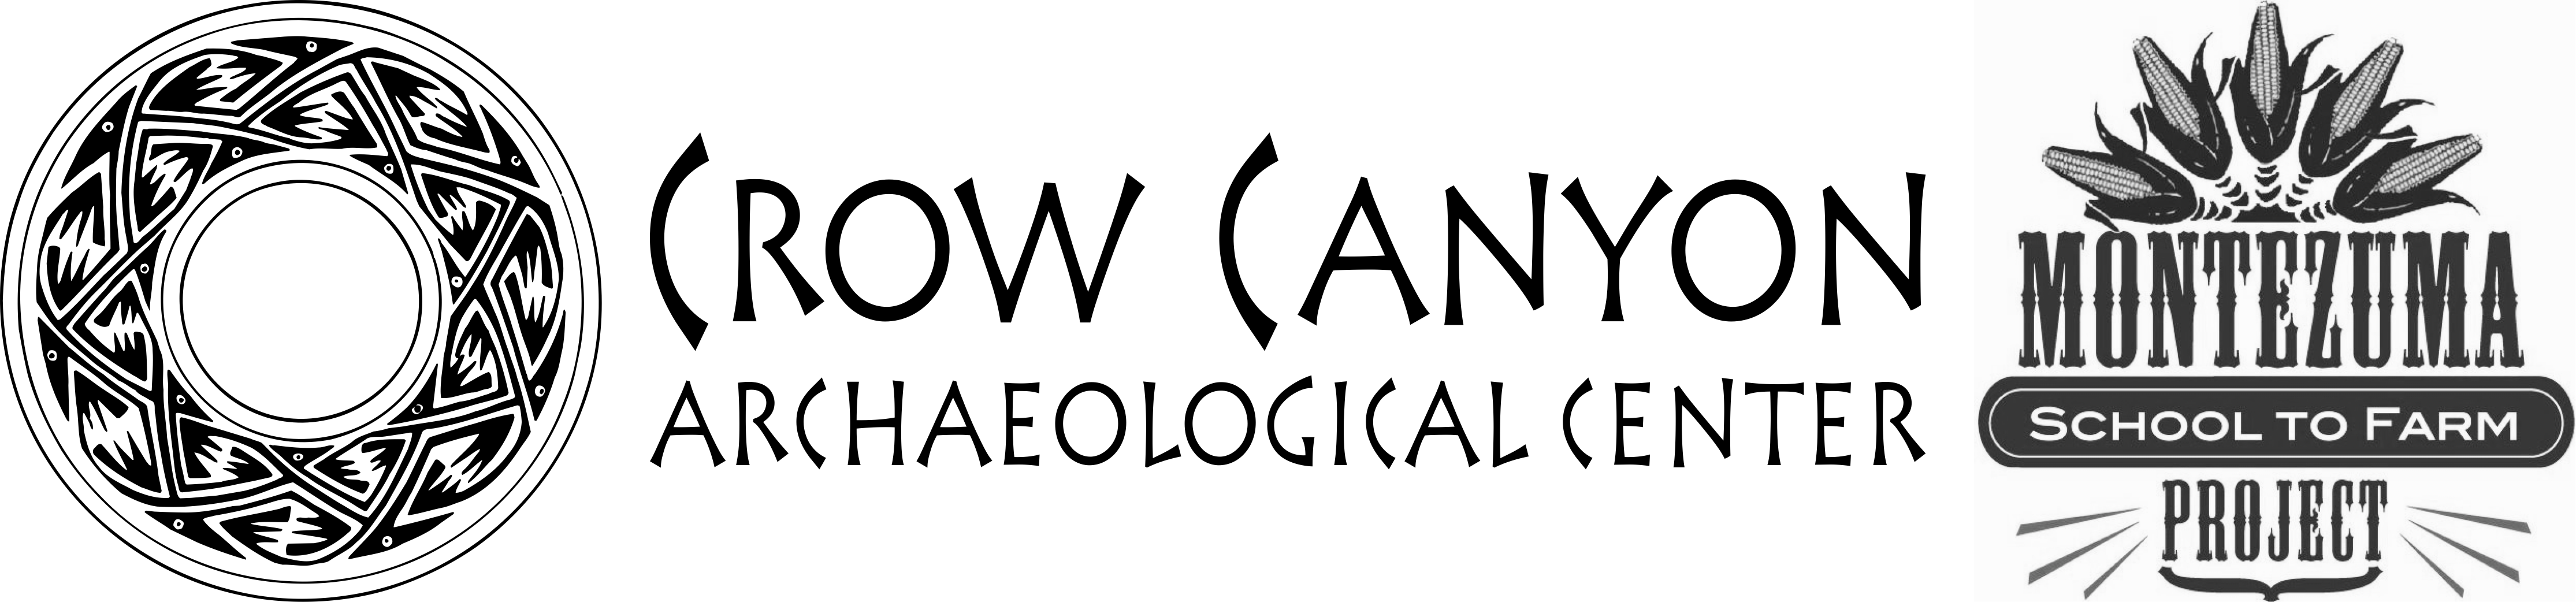 The Crow Canyon and Montezuma School to Farm Project logos